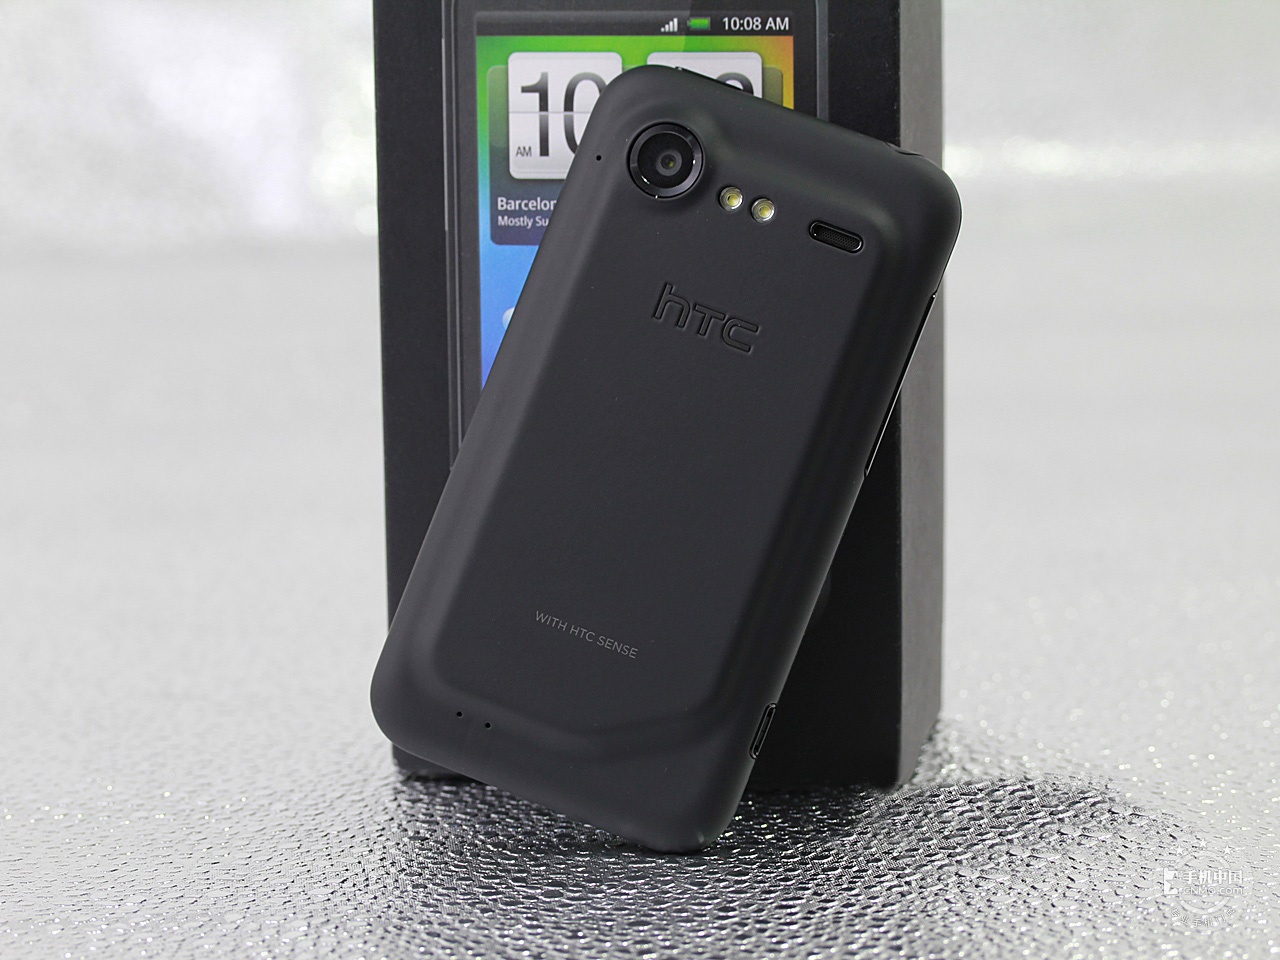 HTC  S710d( Incredible SŰ)